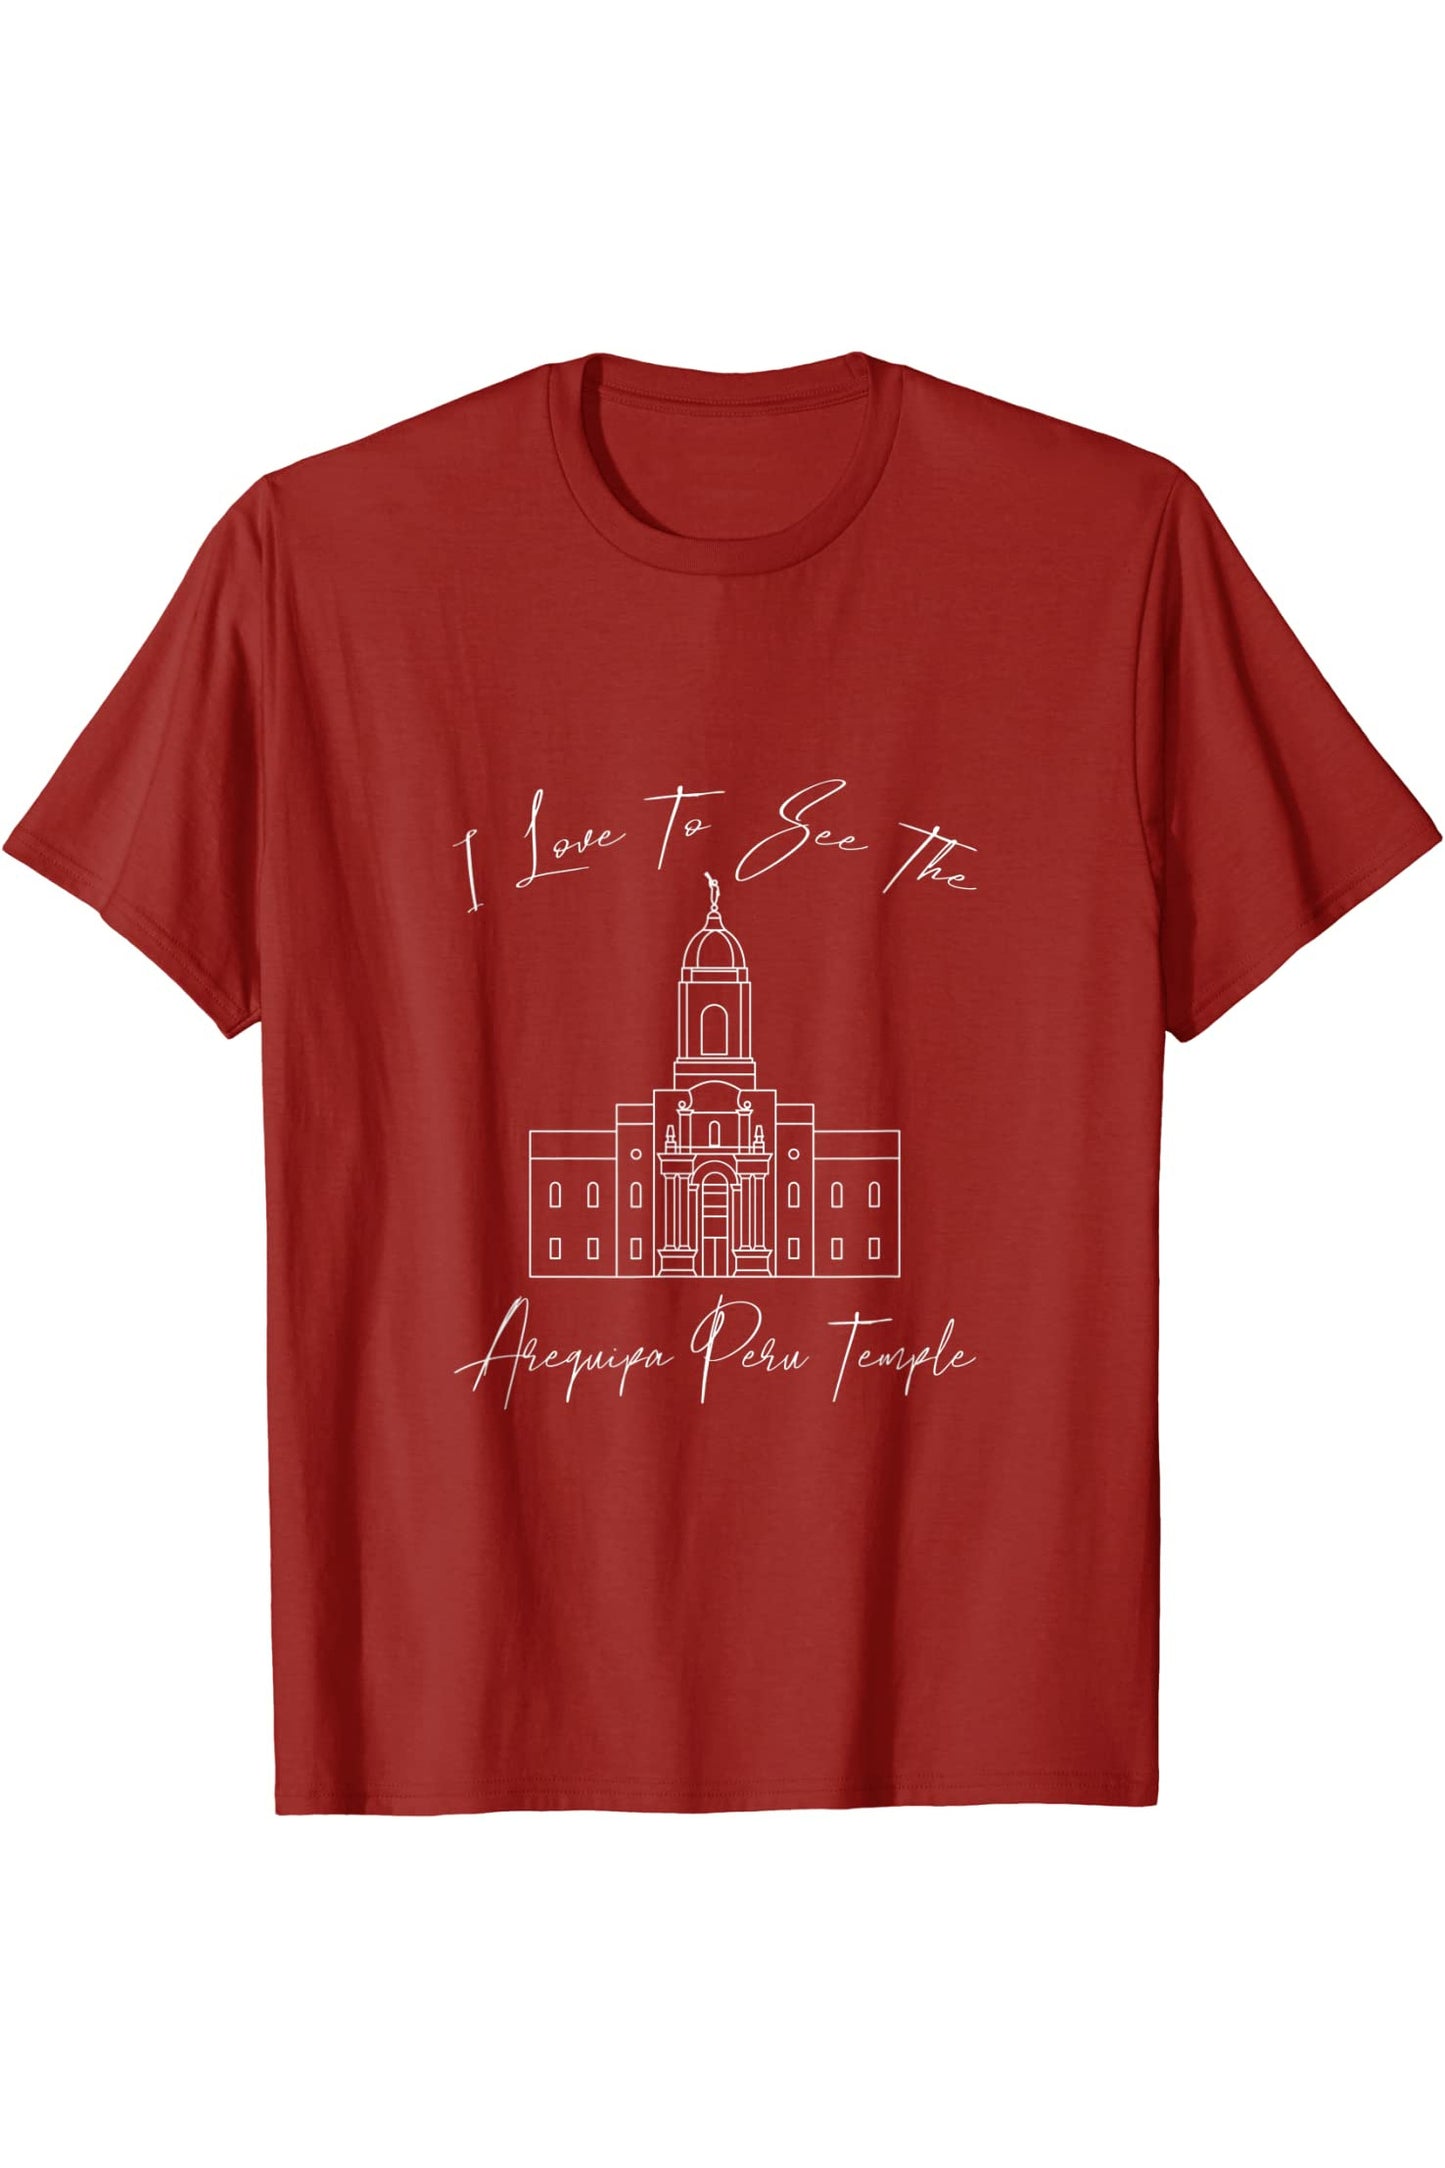 Arequipa Peru Temple T-Shirt - Calligraphy Style (English) US